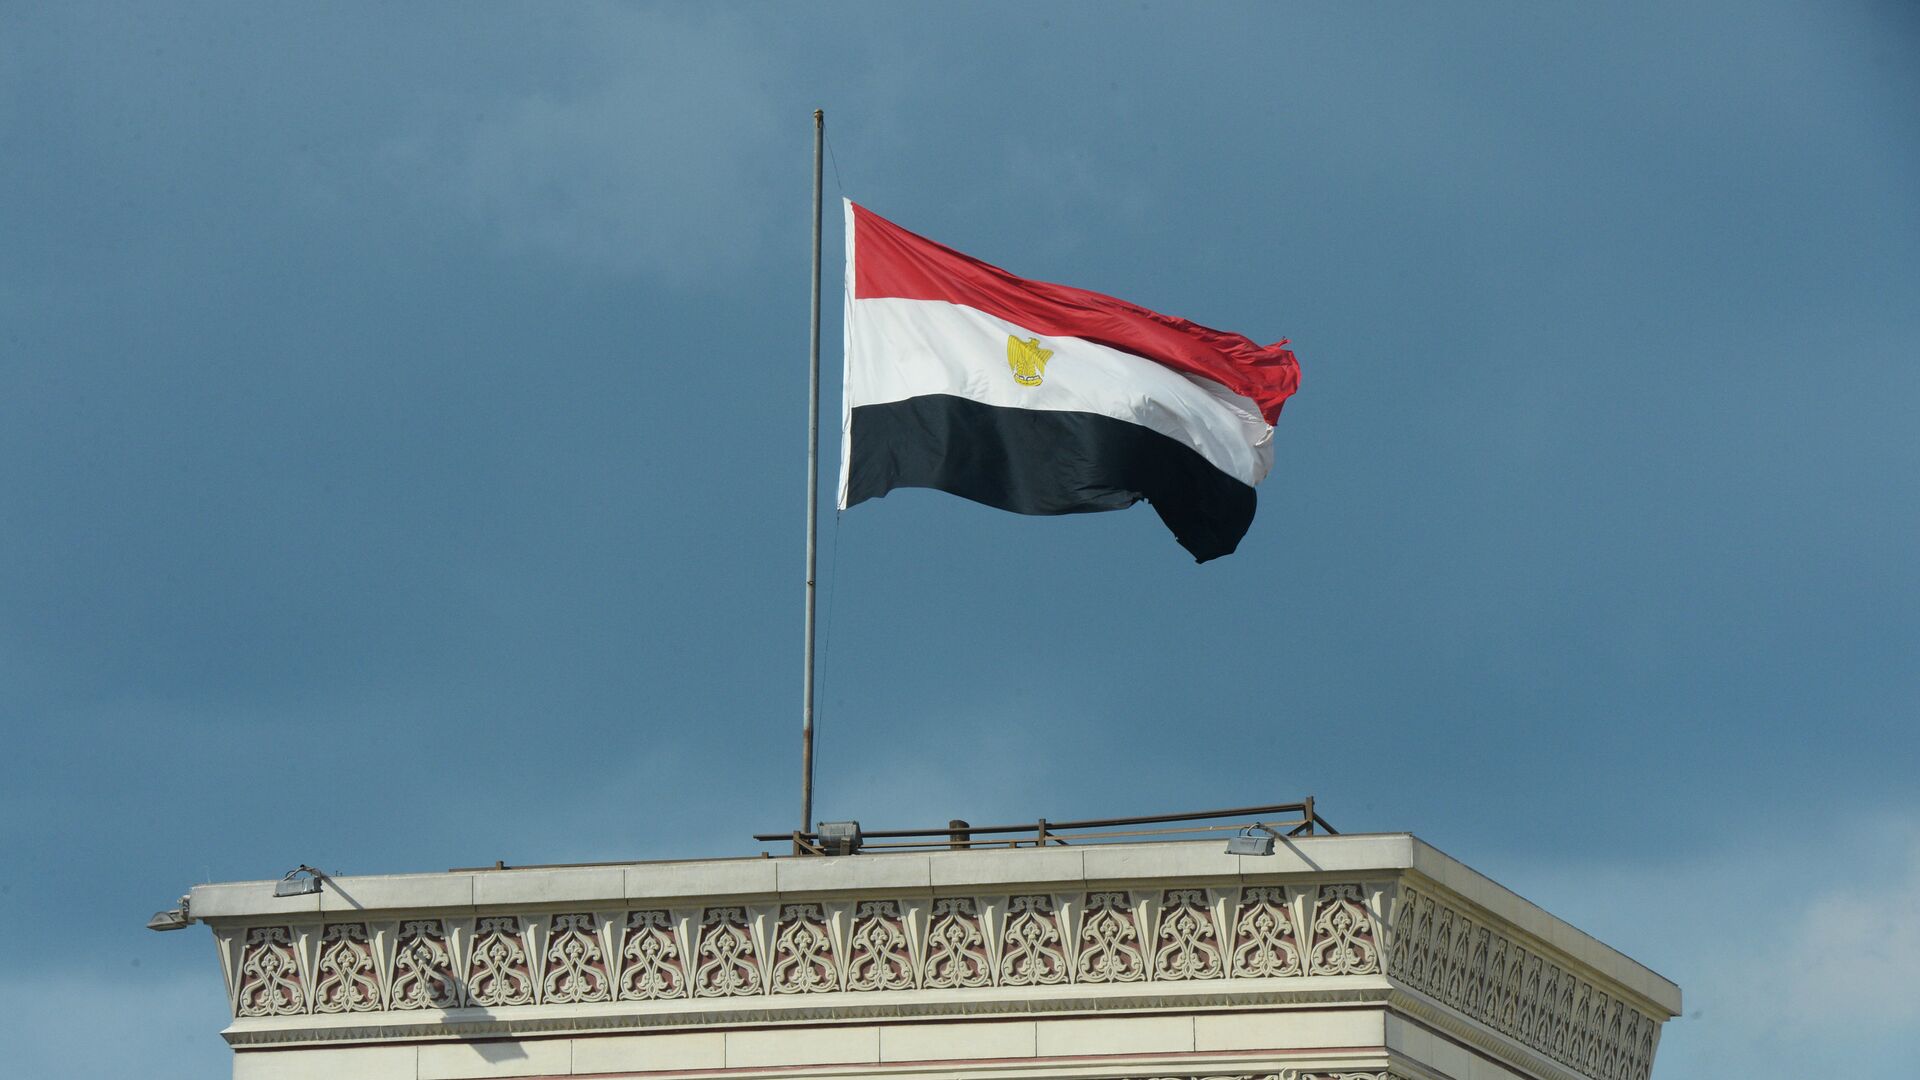 Egypti's national flag on a building in Cairo - Sputnik International, 1920, 05.05.2021